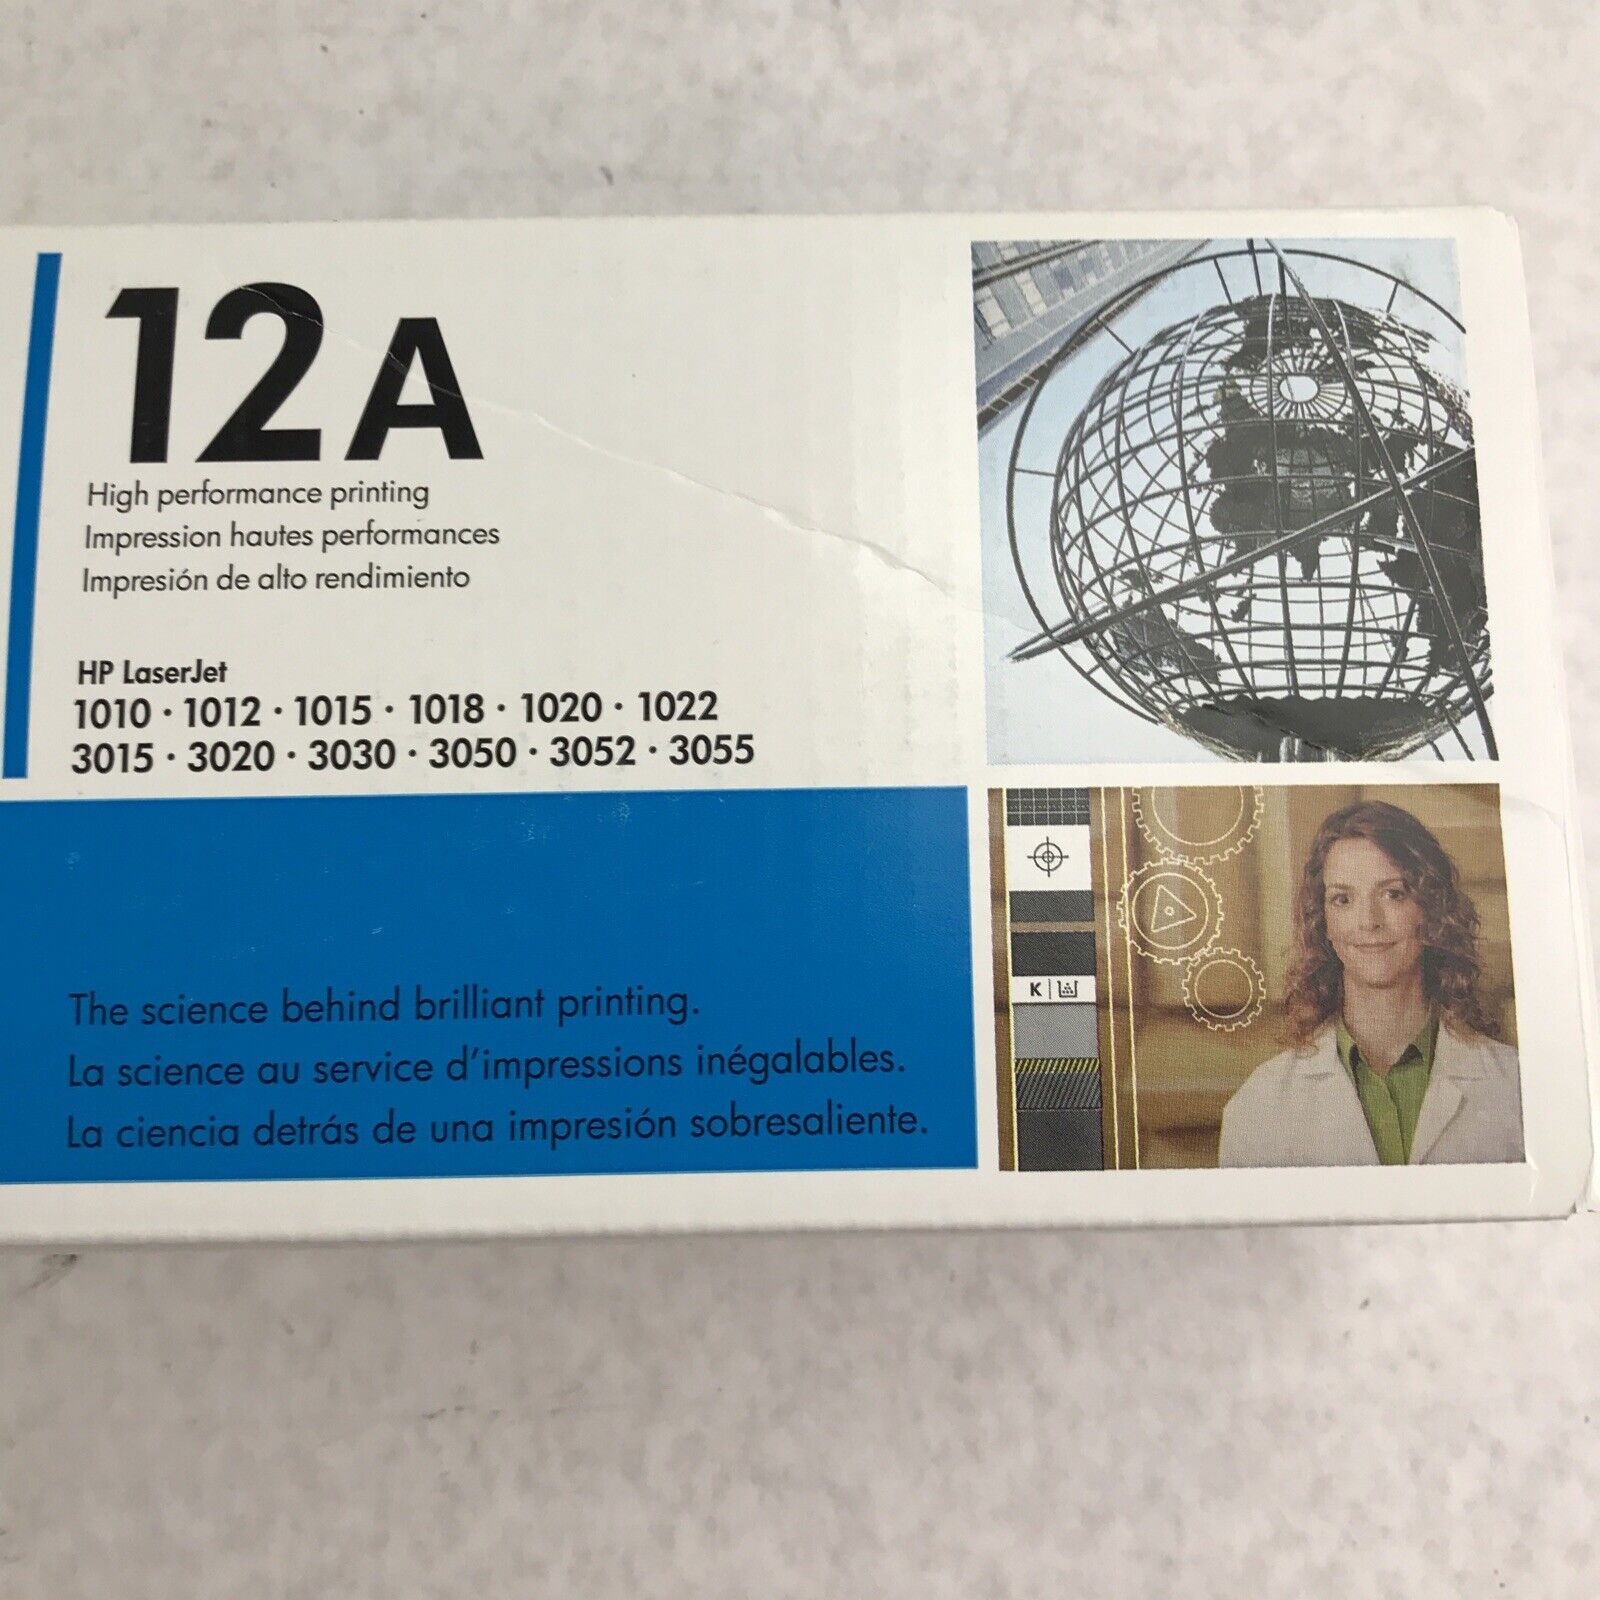 Genuine HP 12A LaserJet Print Cartridge Q2612A Factory Sealed